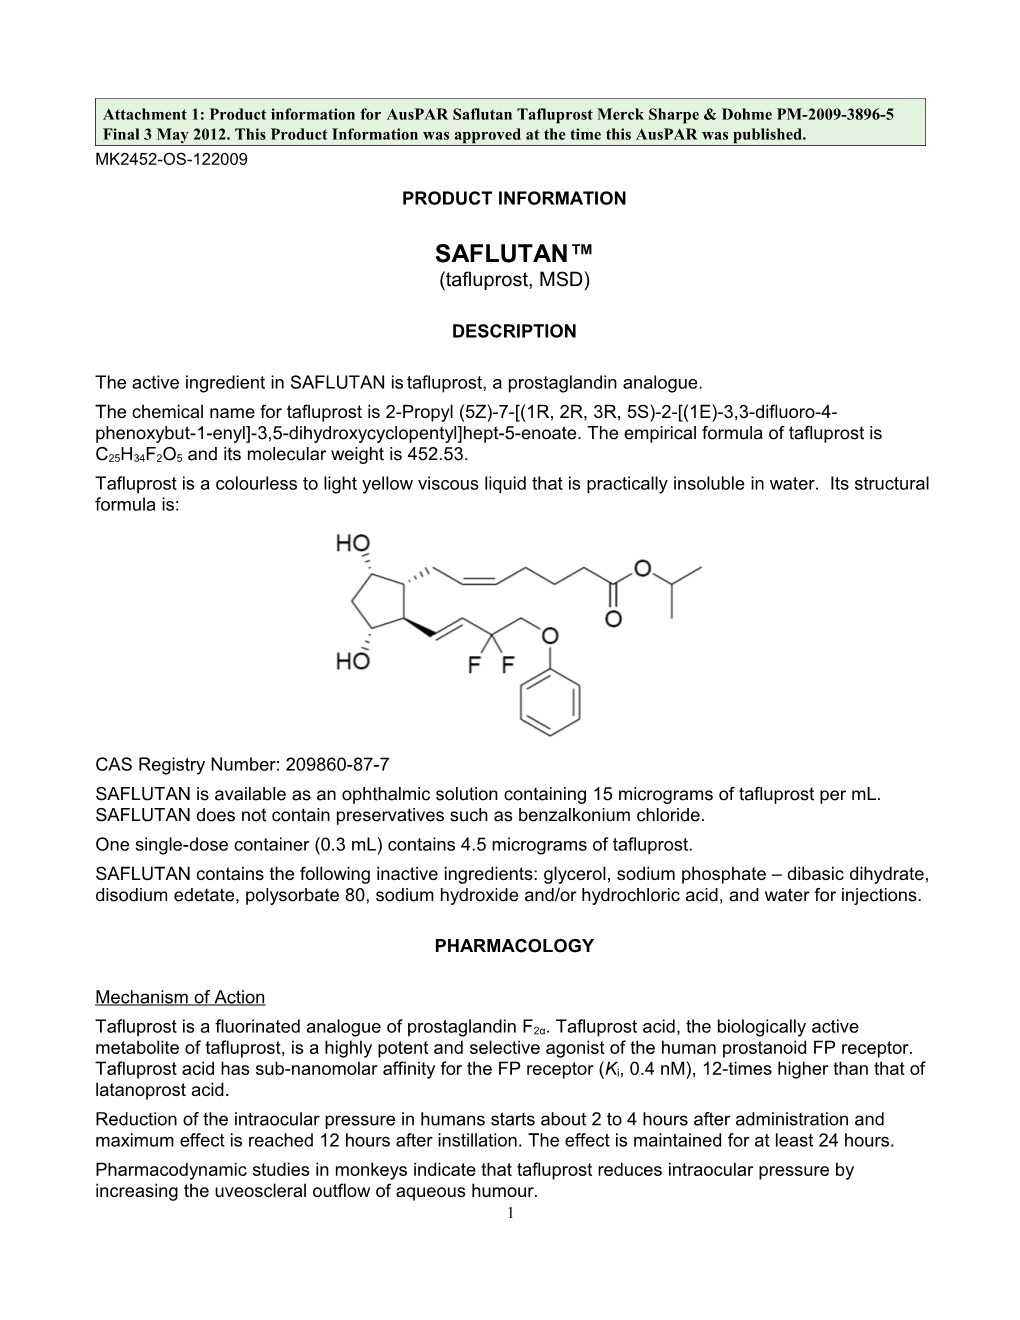 Attachment 1: Product Information for Saflutan (Tafluprost)